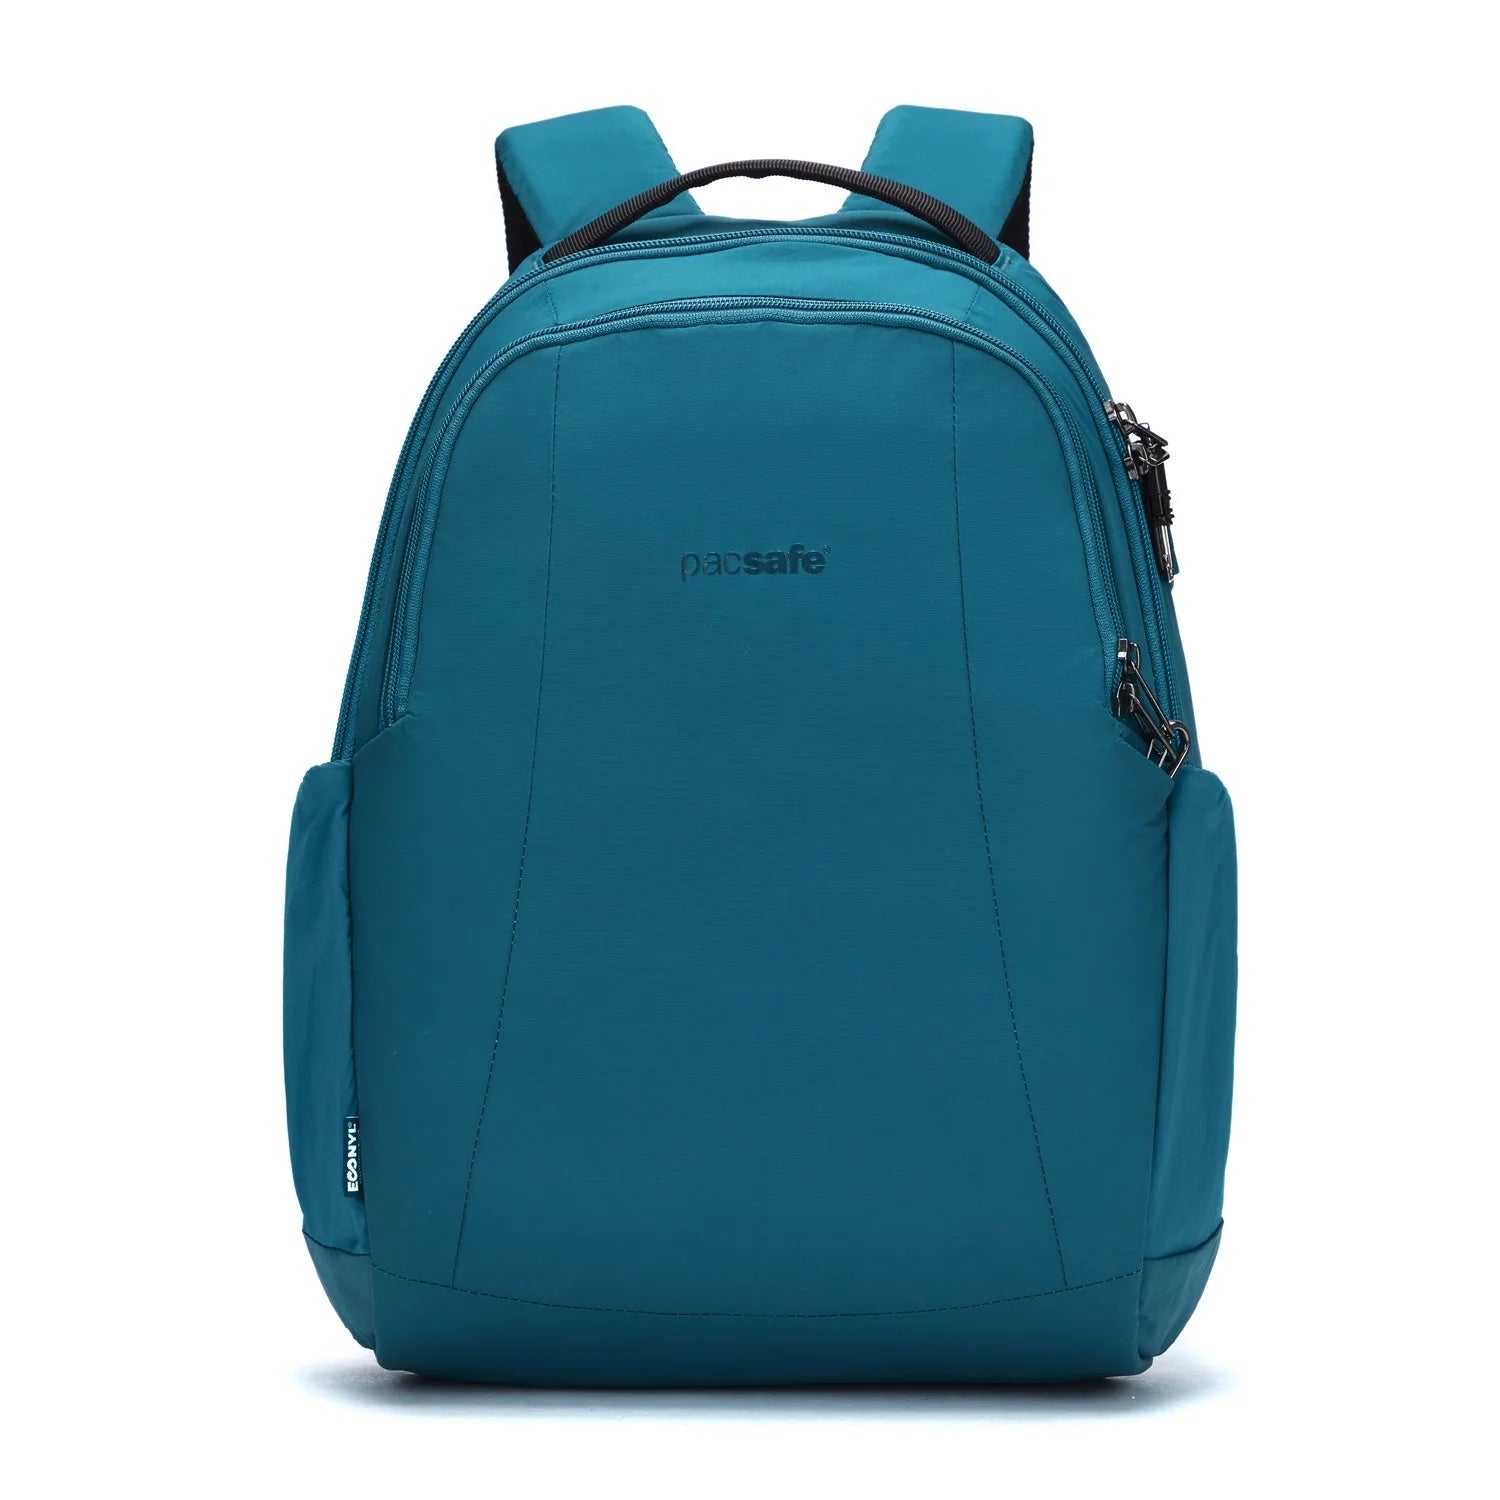 Pacsafe - LS350 Backpack Tidal - Teal